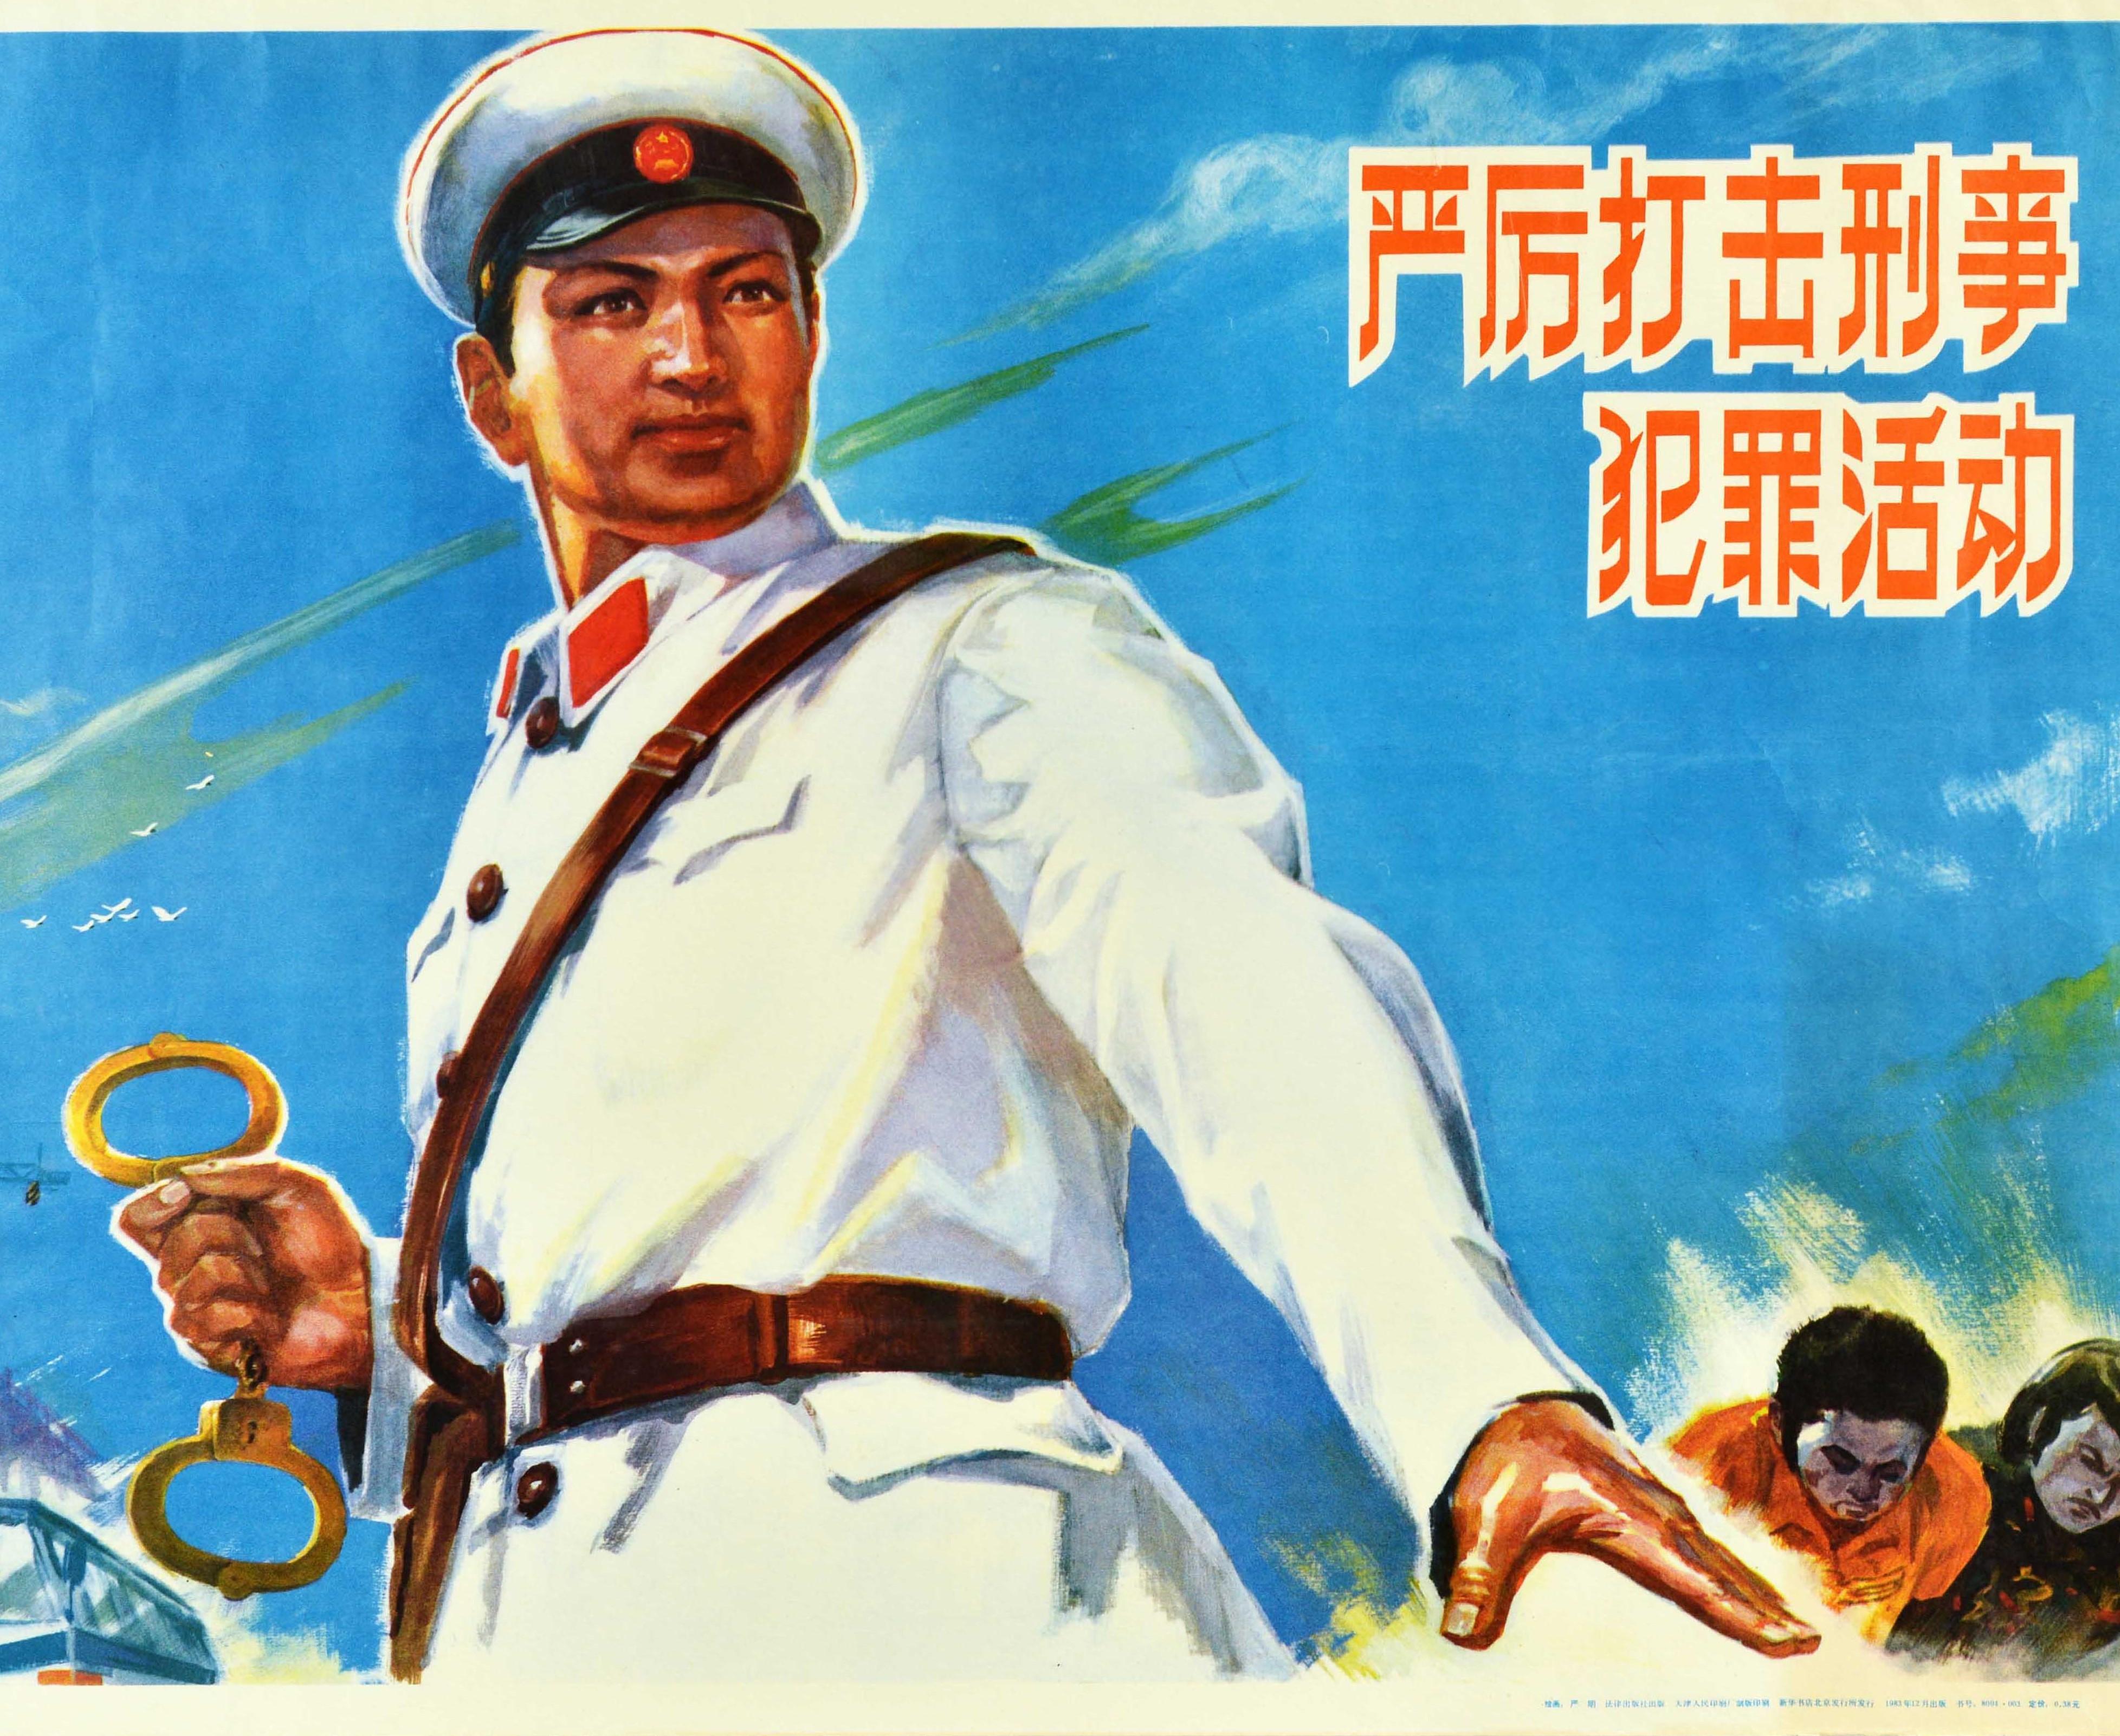  Original Vintage Propaganda Poster Criminal Activity Crackdown Law Police China - Print by Yan Ming